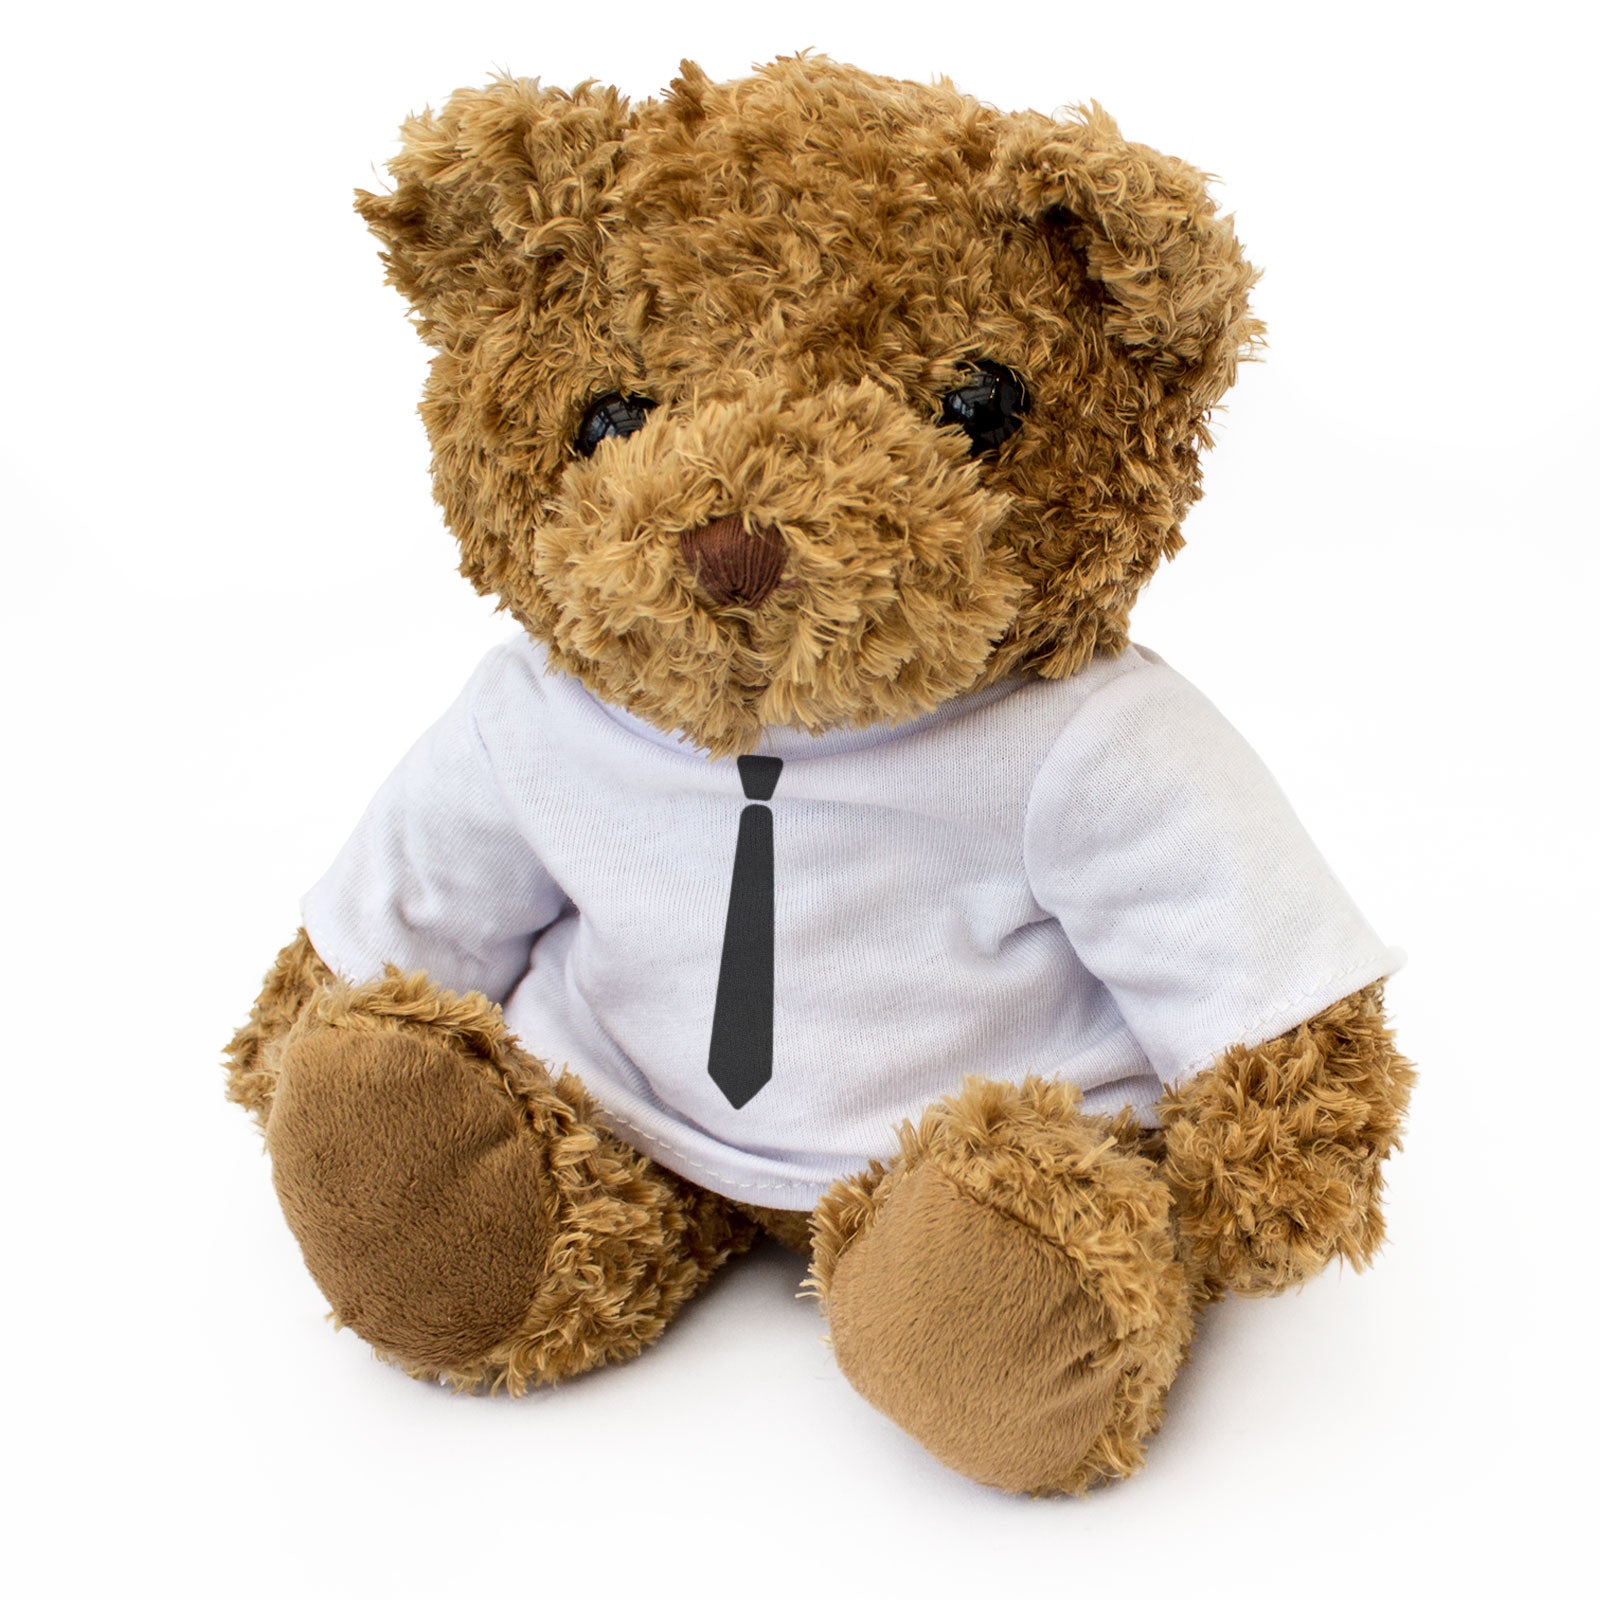 Black Tie - Teddy Bear